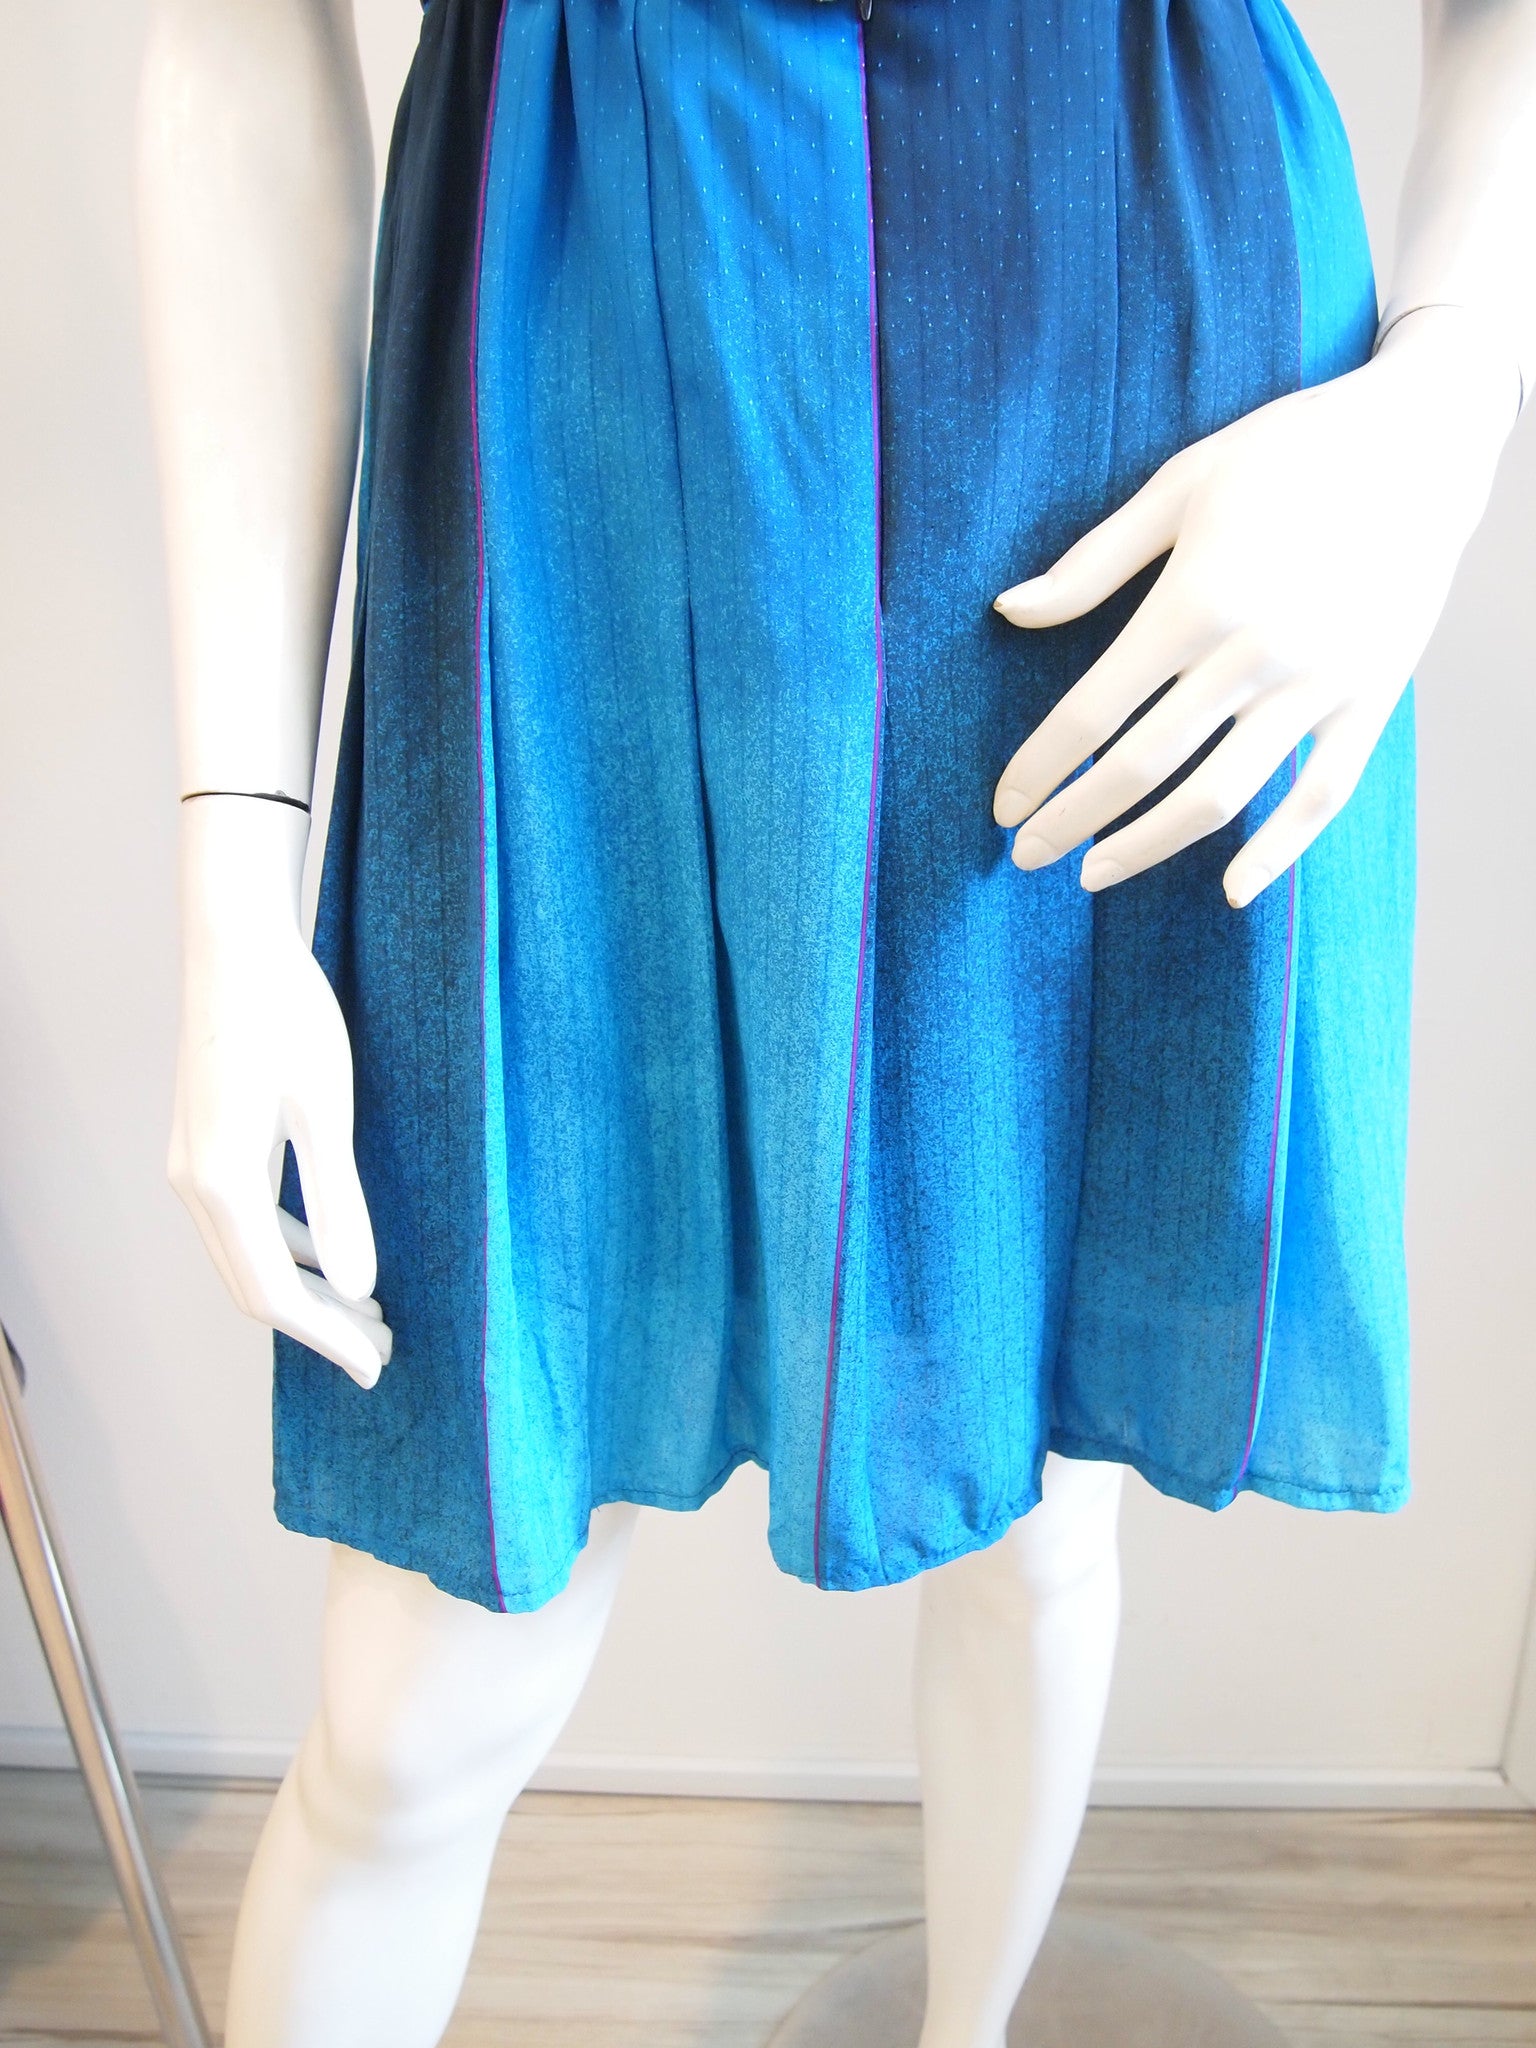 50 Shades of Blue Vintage Dress